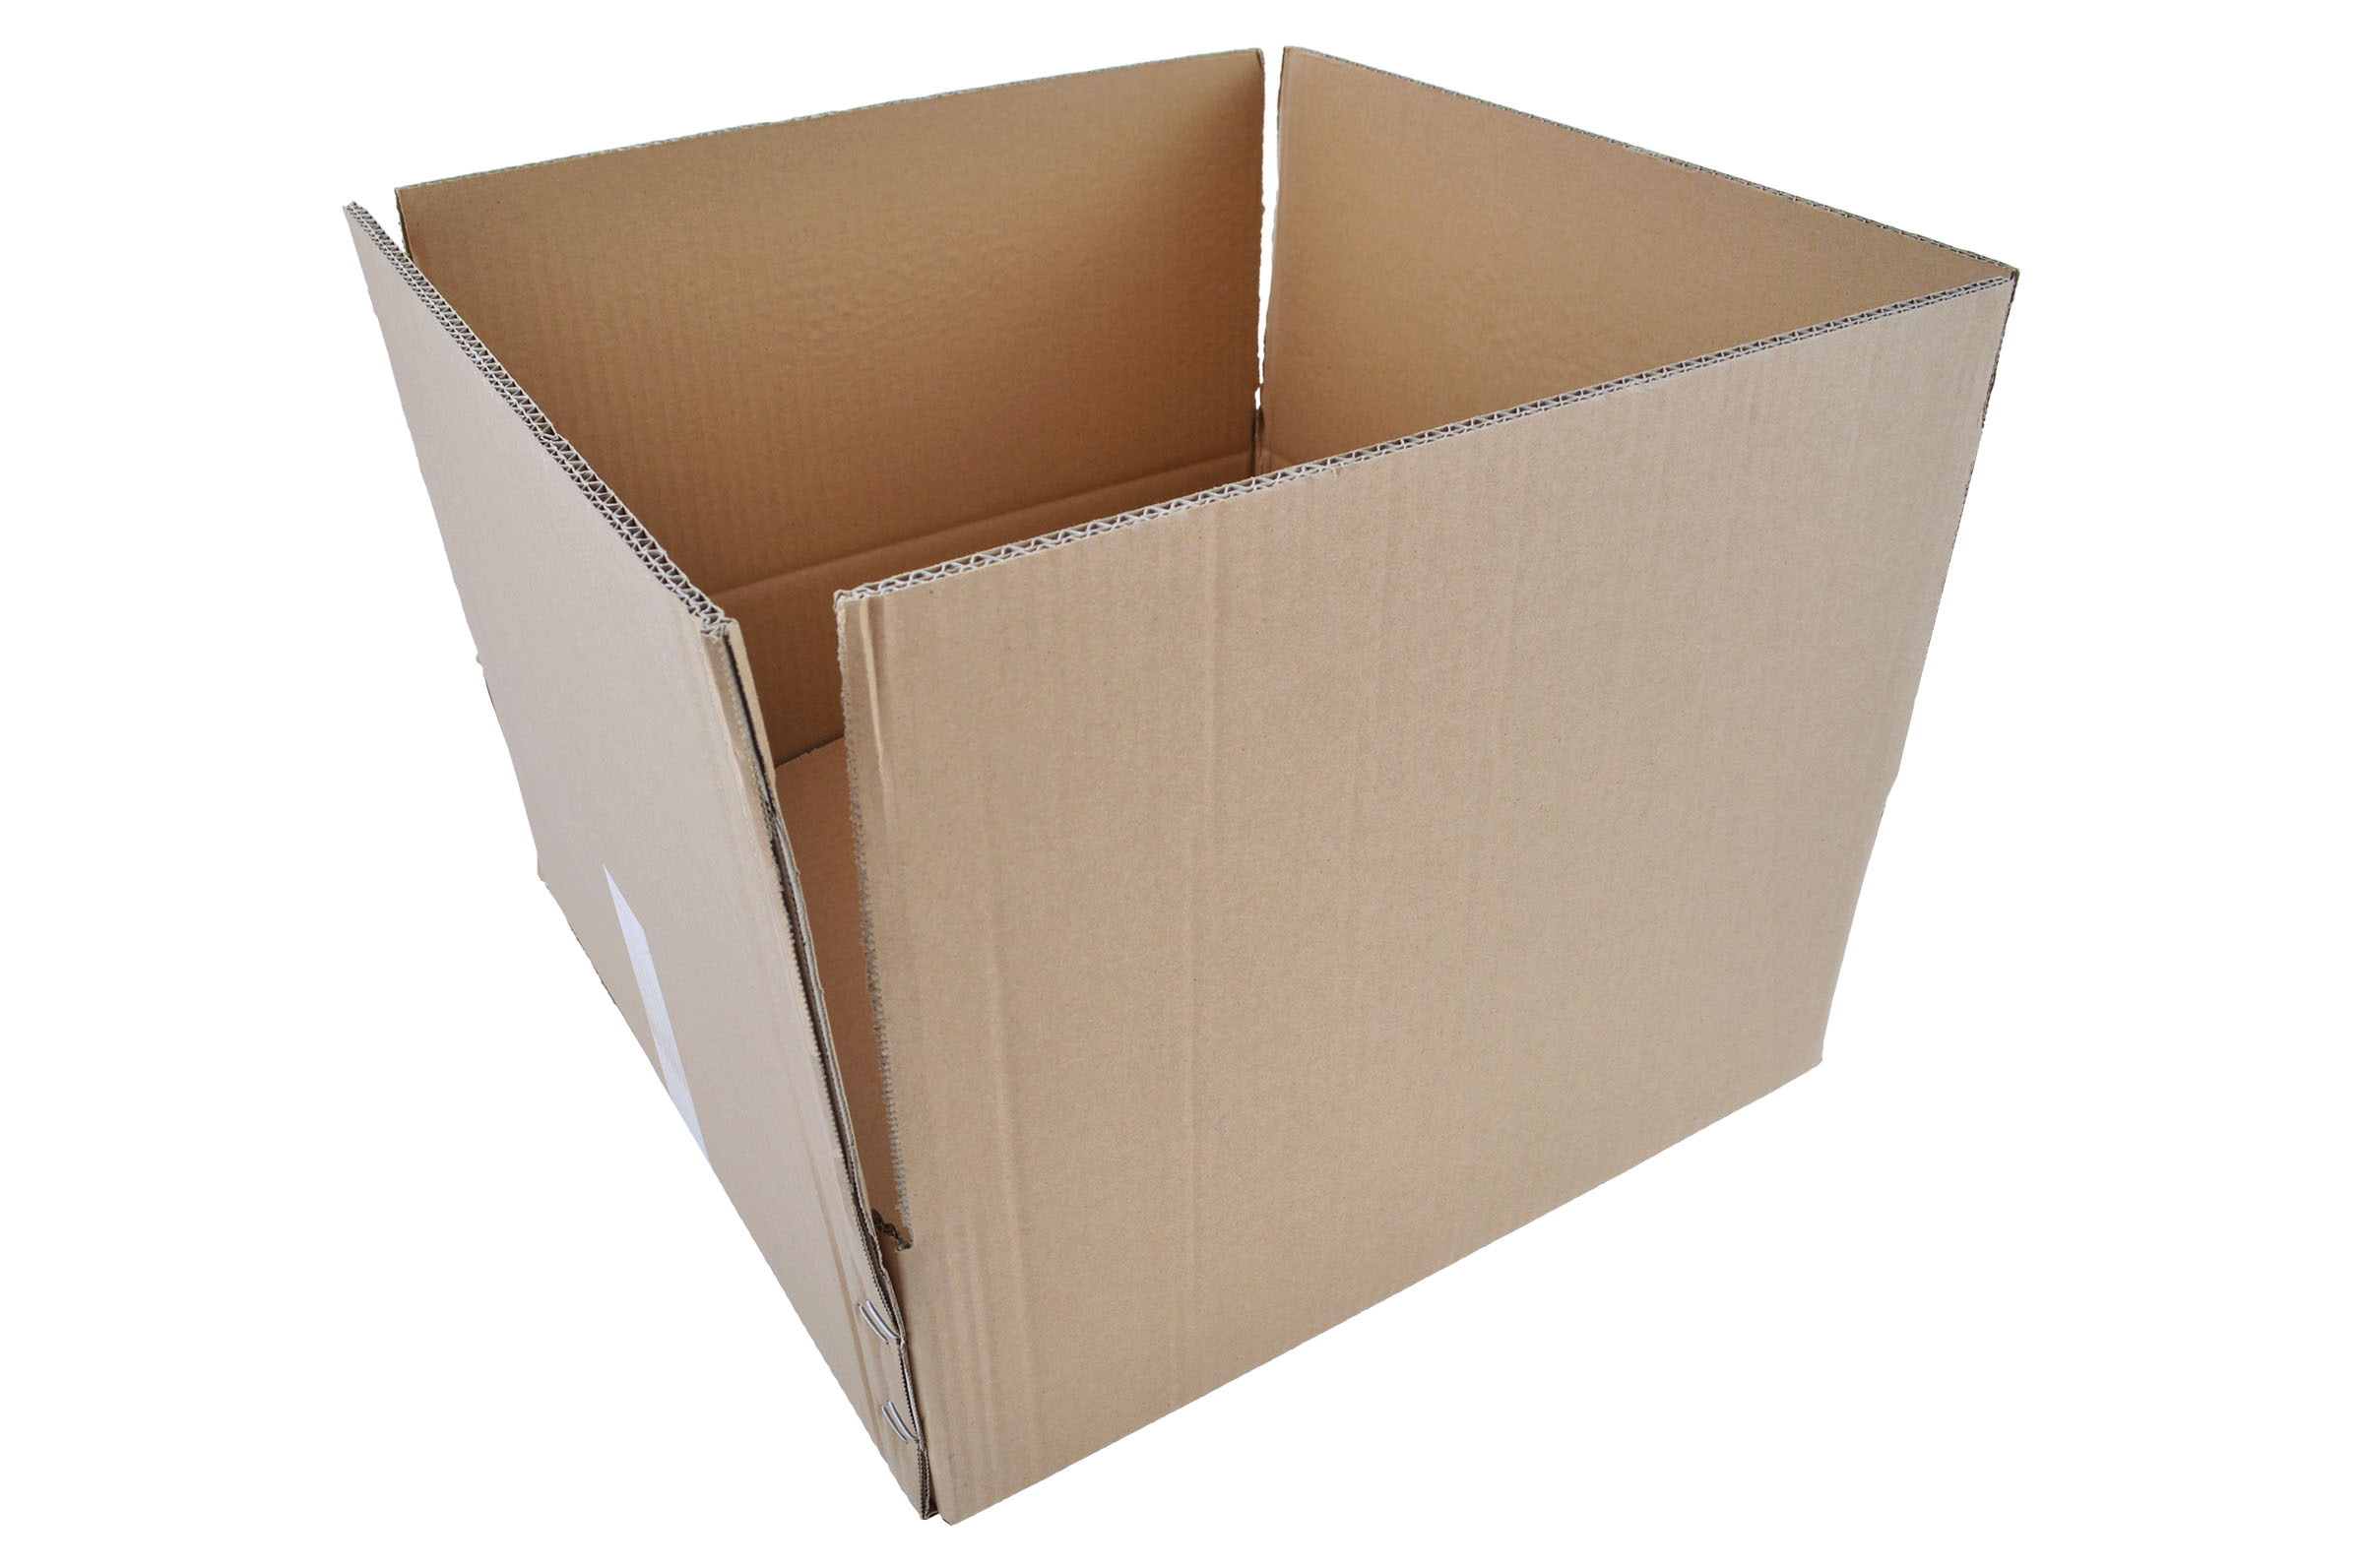 Boîtes en Carton Expédition & Stockage, Neutre sans logo - 40 x 40